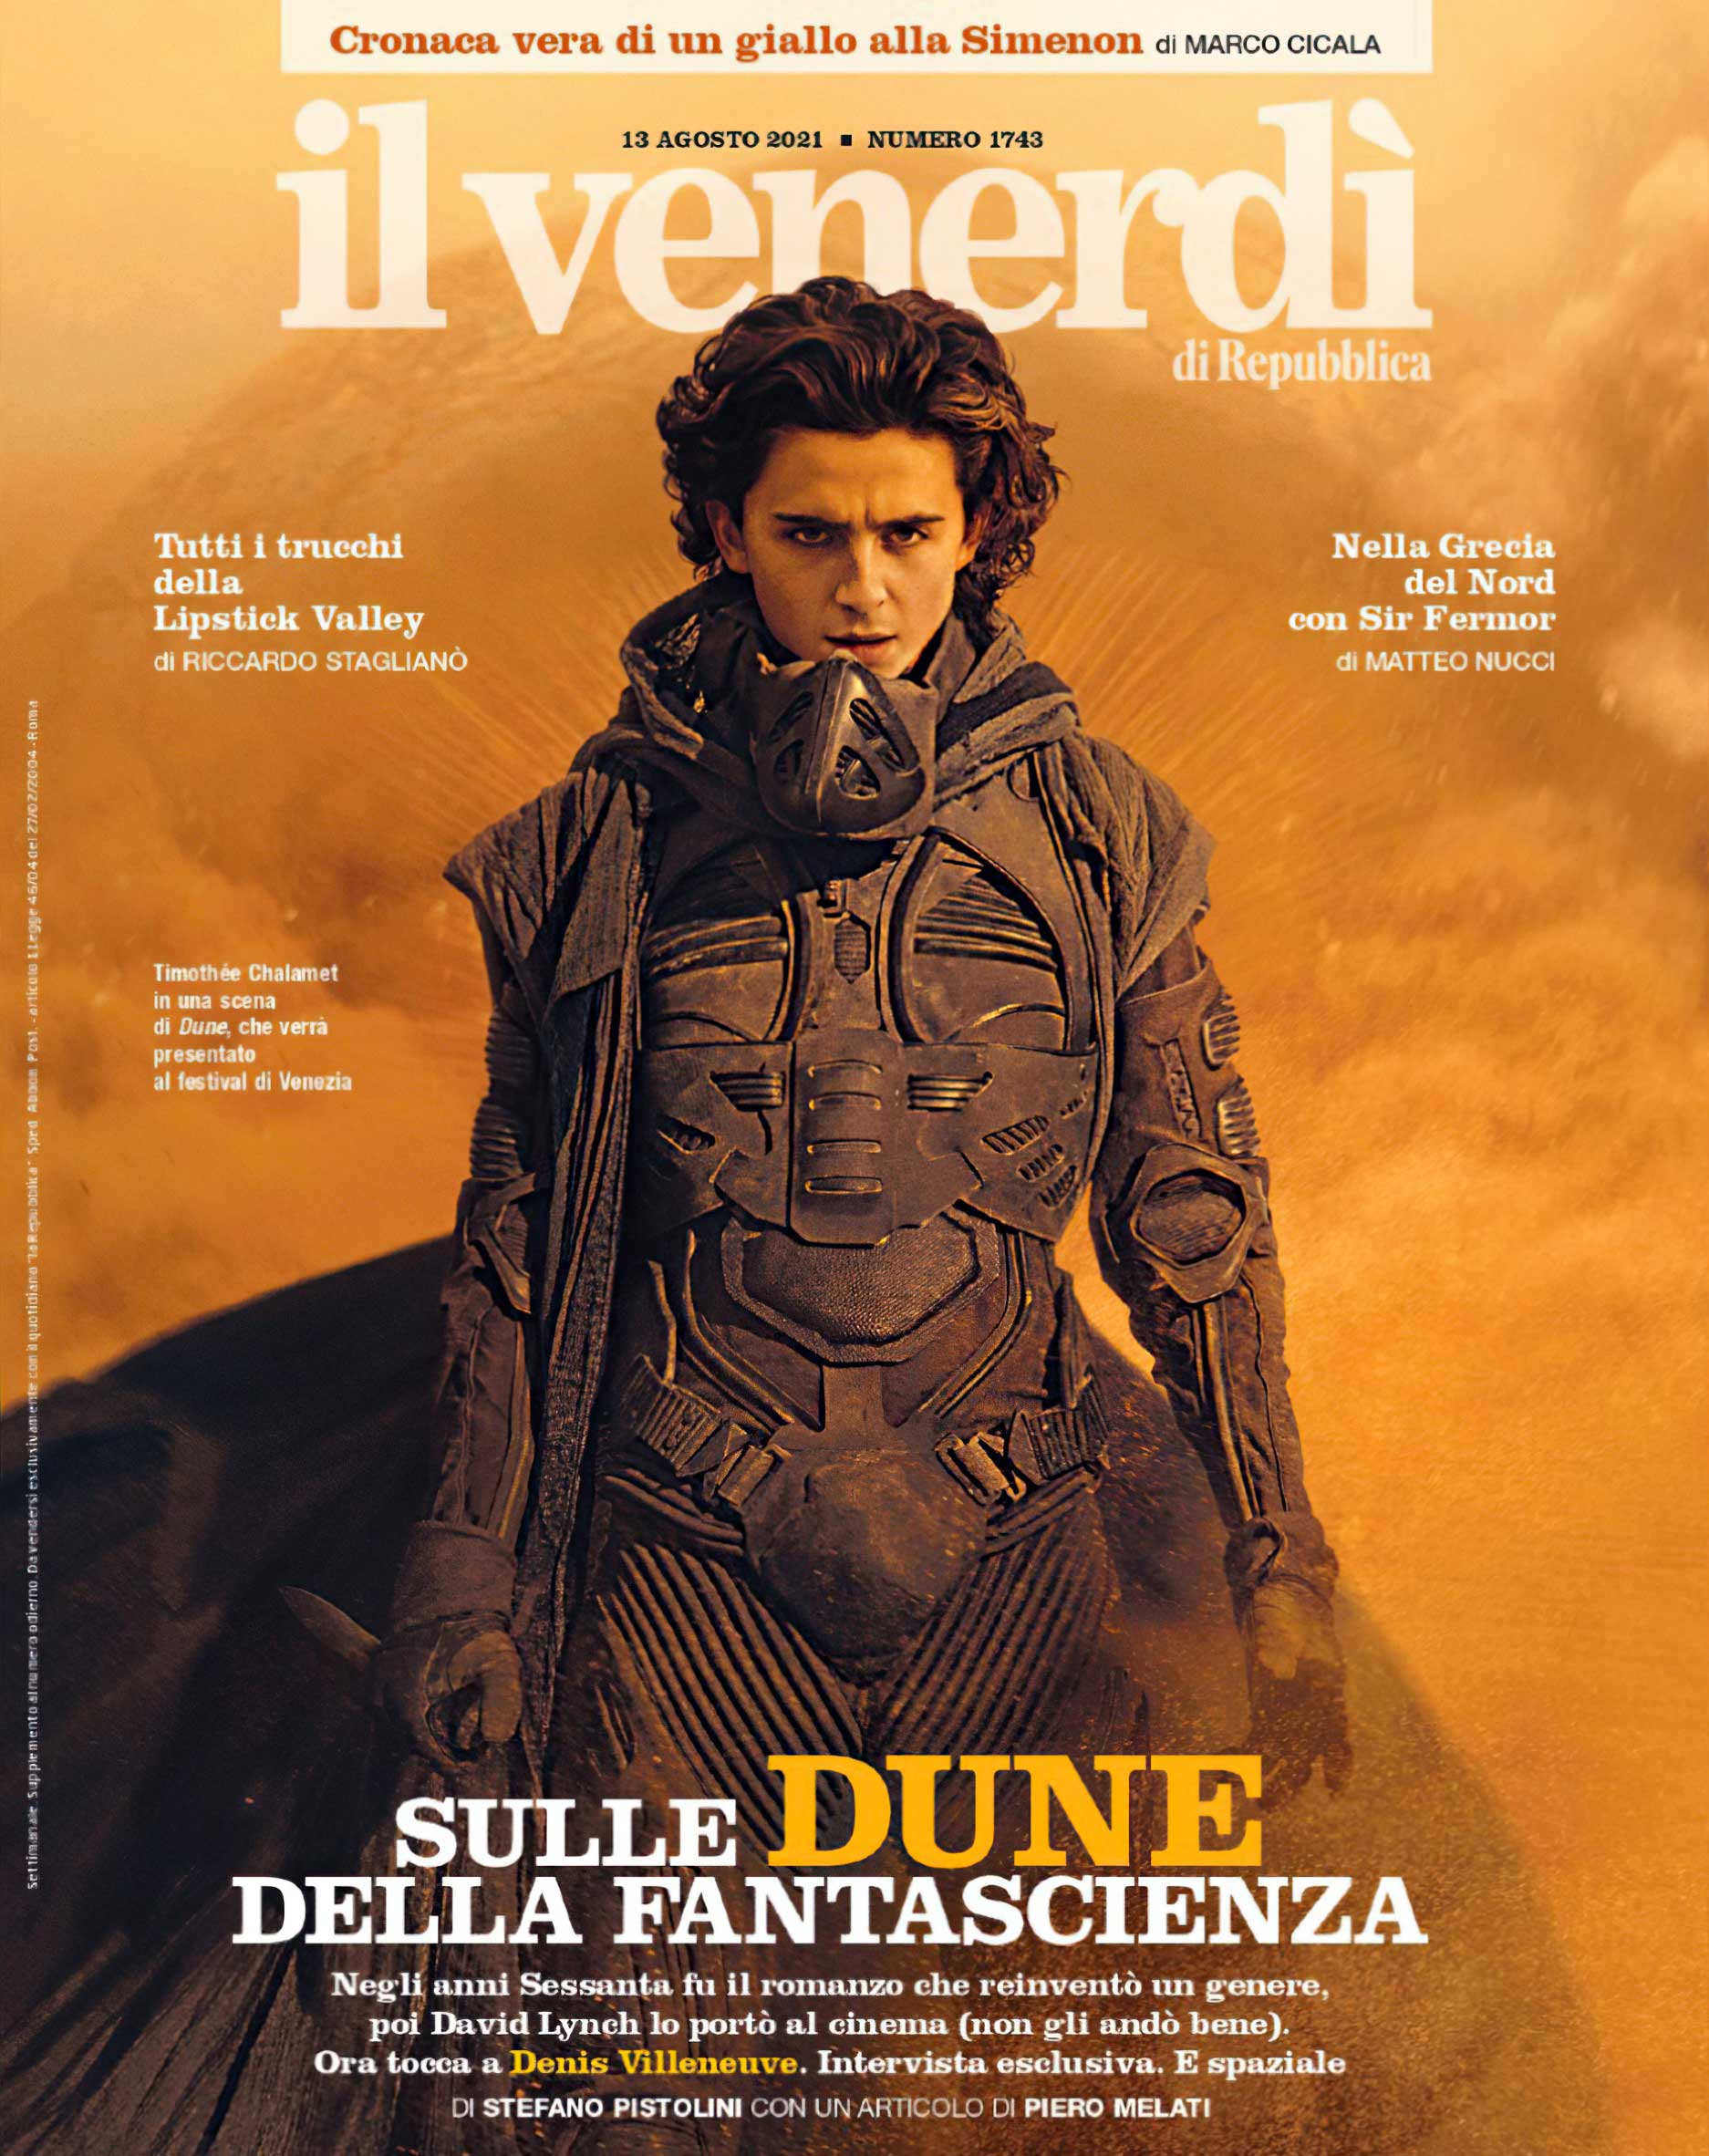 Dune-themed cover for the Italian magazine, Il Venerdì di Repubblica (August 13, 2021 issue), featuring Timothée Chalamet as Paul Atreides and a gargantuan sandworm.